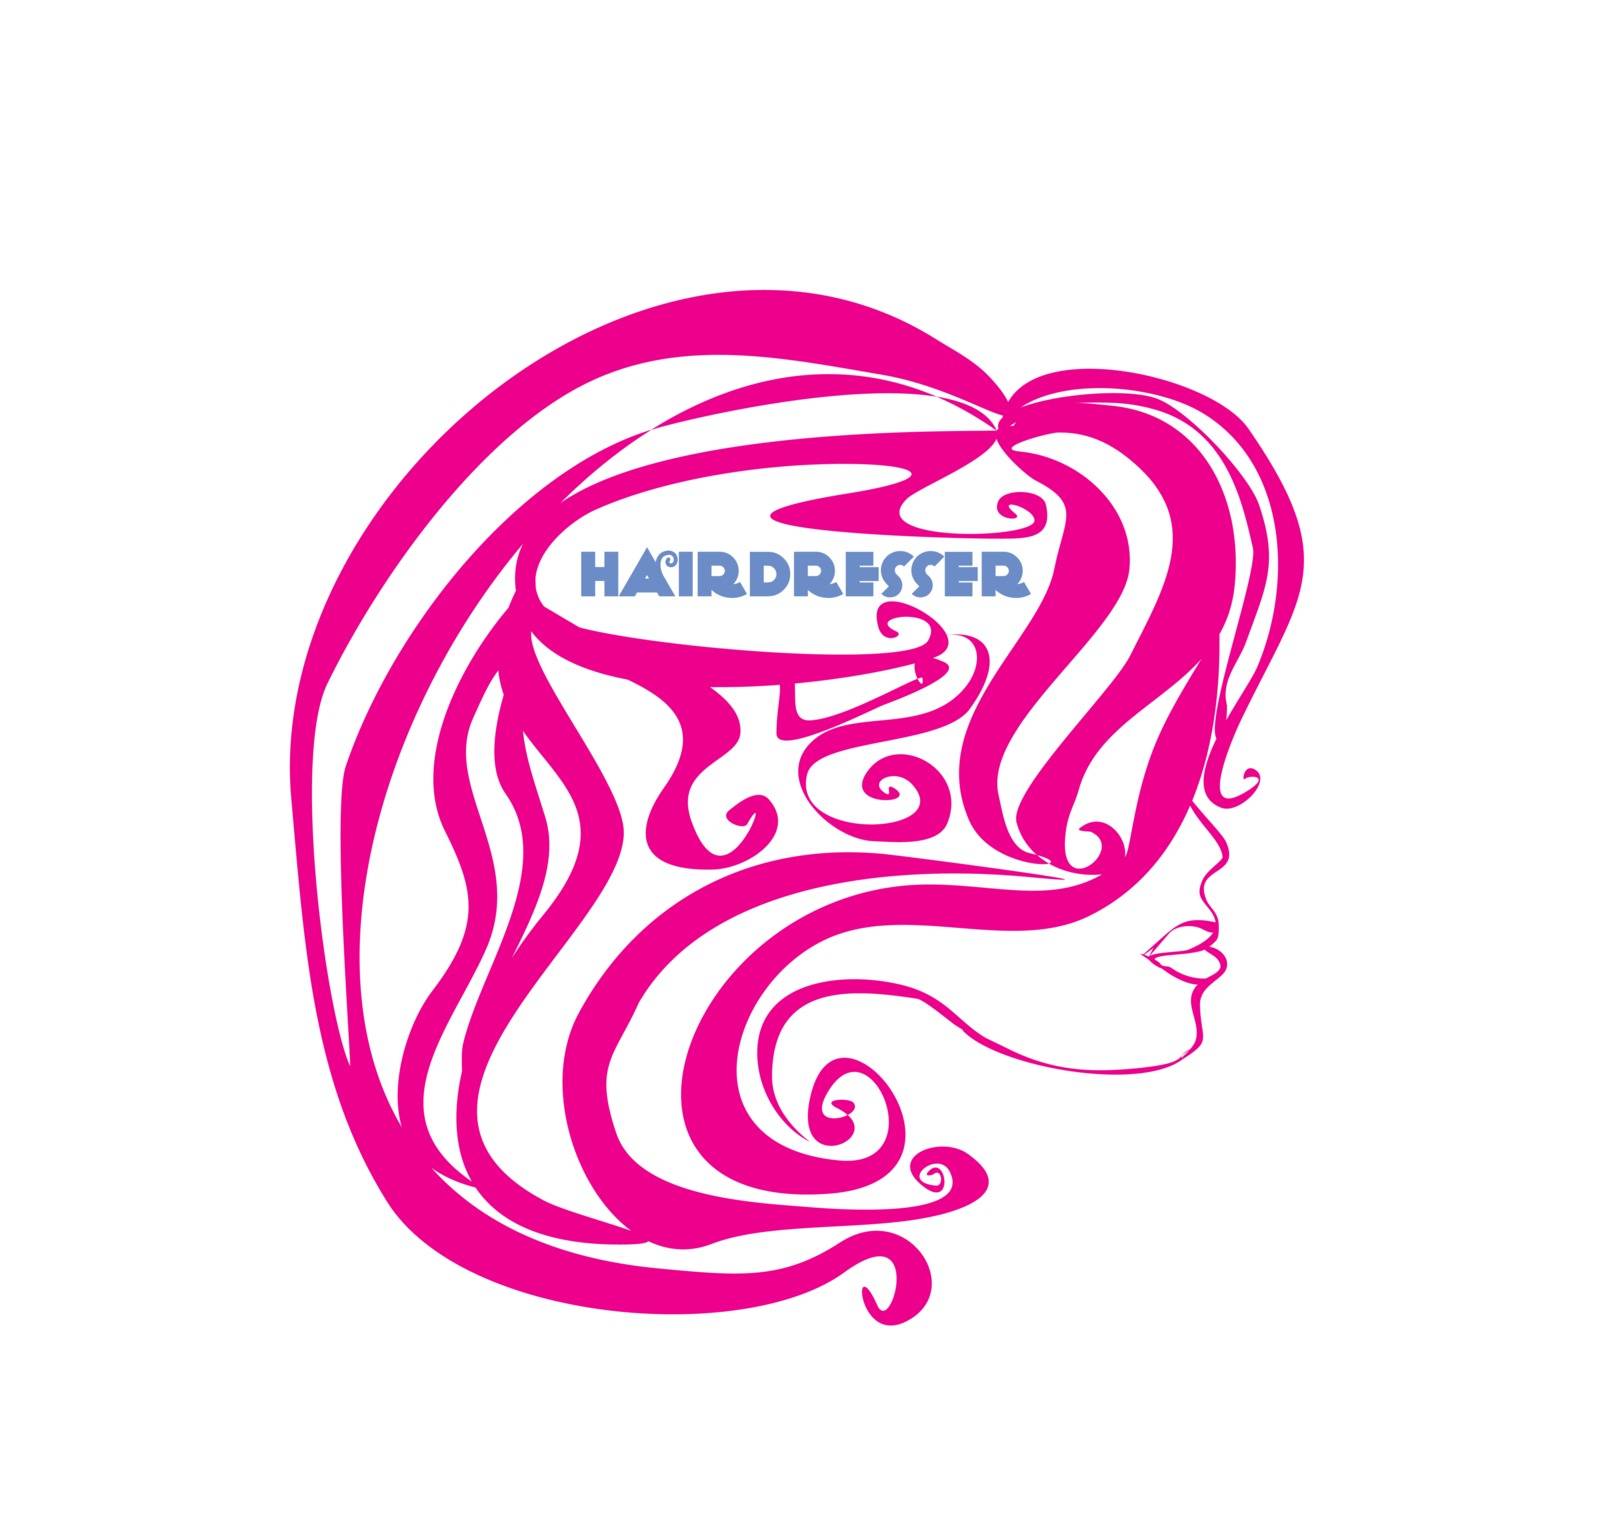 hairdresser salon logo by JackyBrown